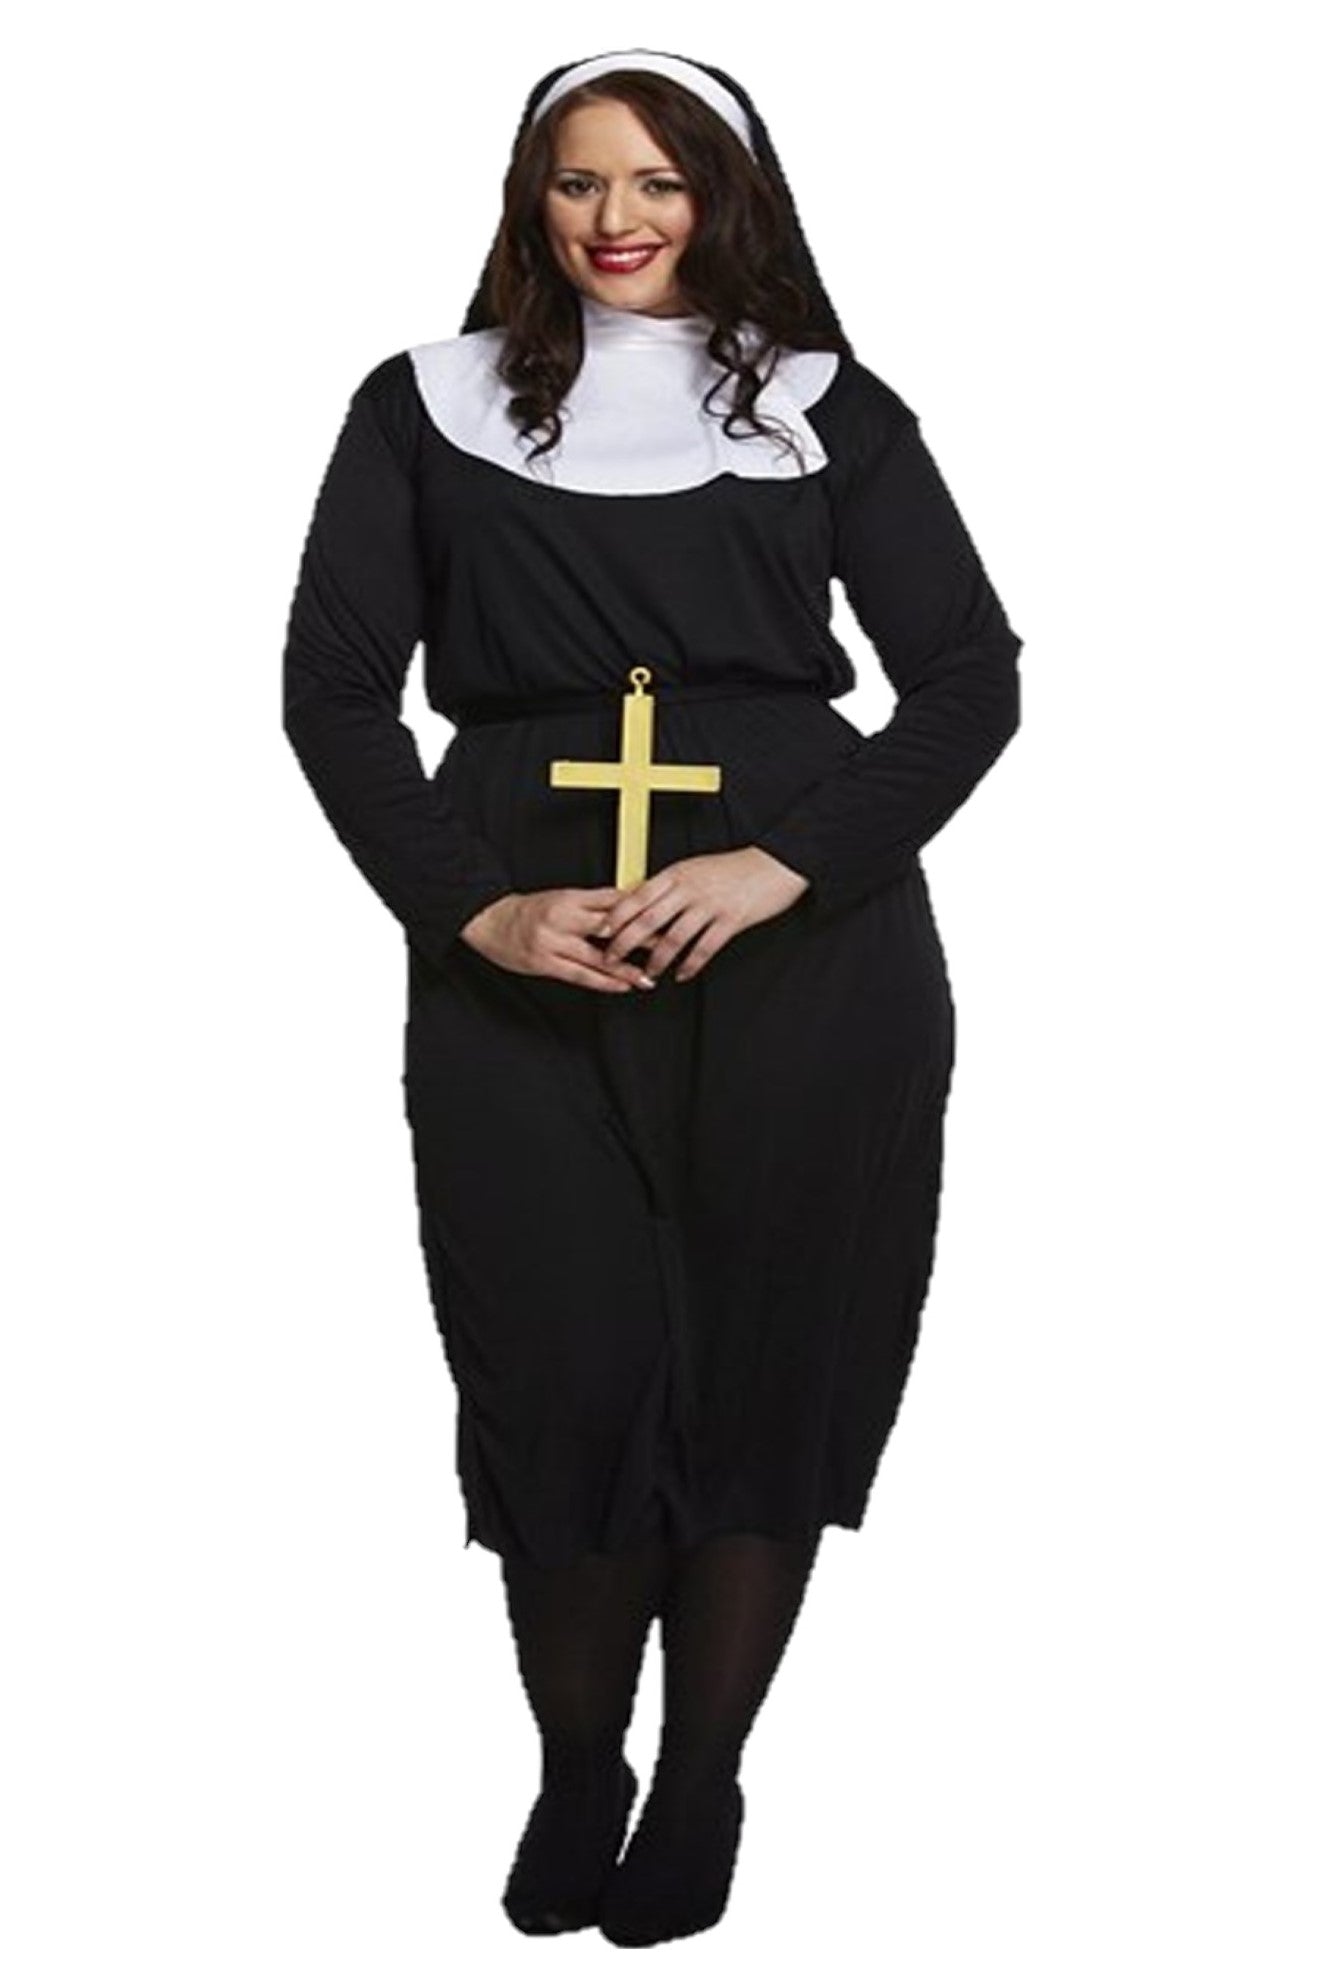 Adult Women’s Classic Nun Curvy Girl Fancy Dress Costume With Large Cross